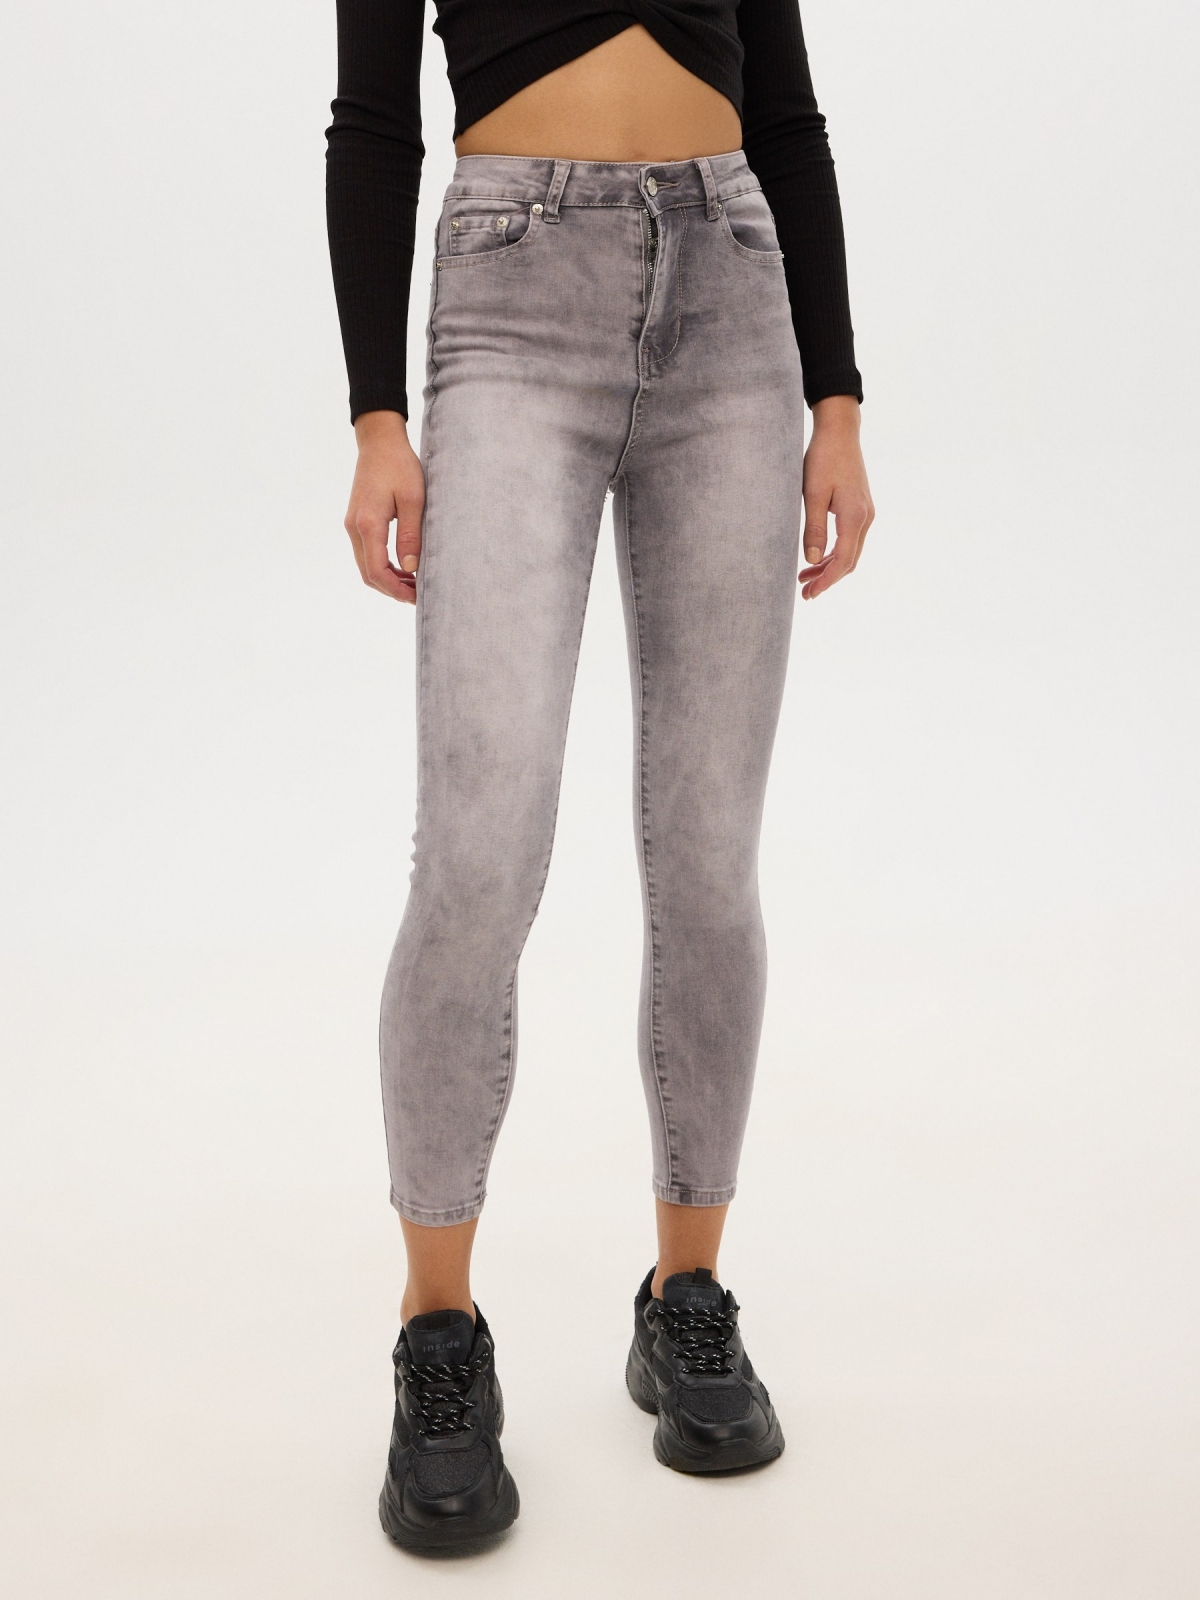 Jeans skinny high rise gris claro vista media frontal